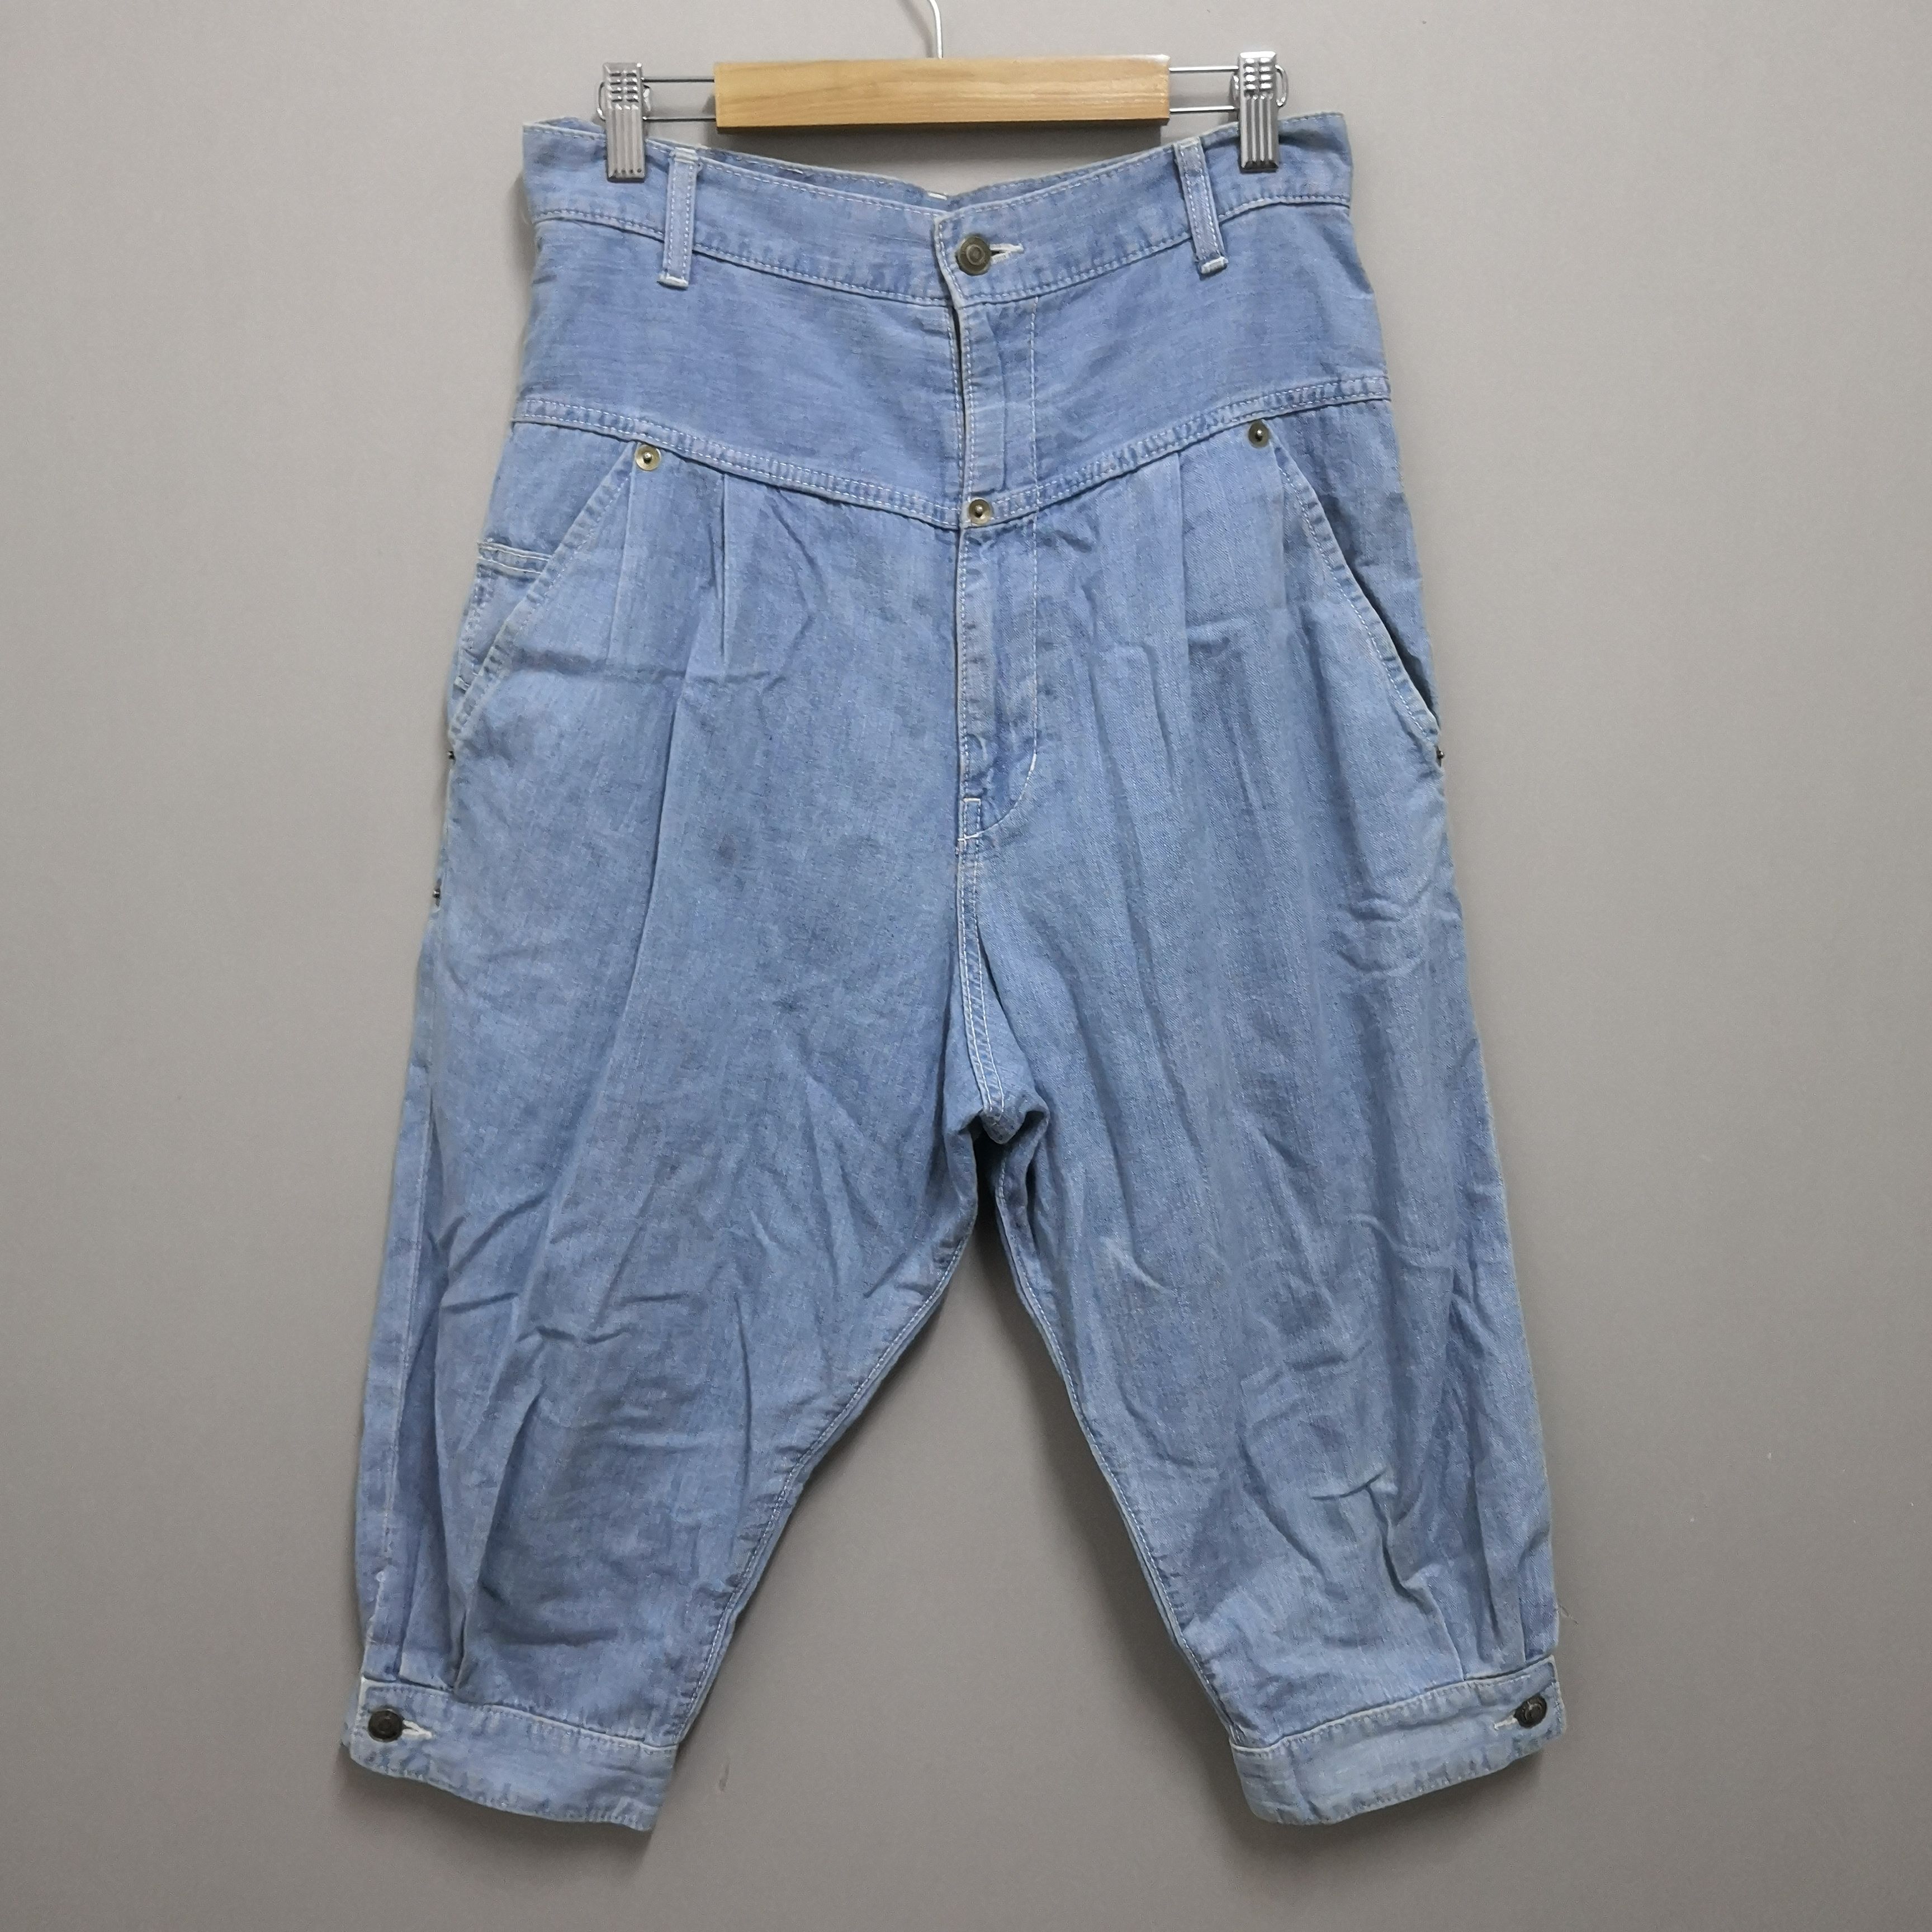 Issey Miyake - Mercibeaucoup Blue Clown Pants Jeans Japan Streetwear - 1